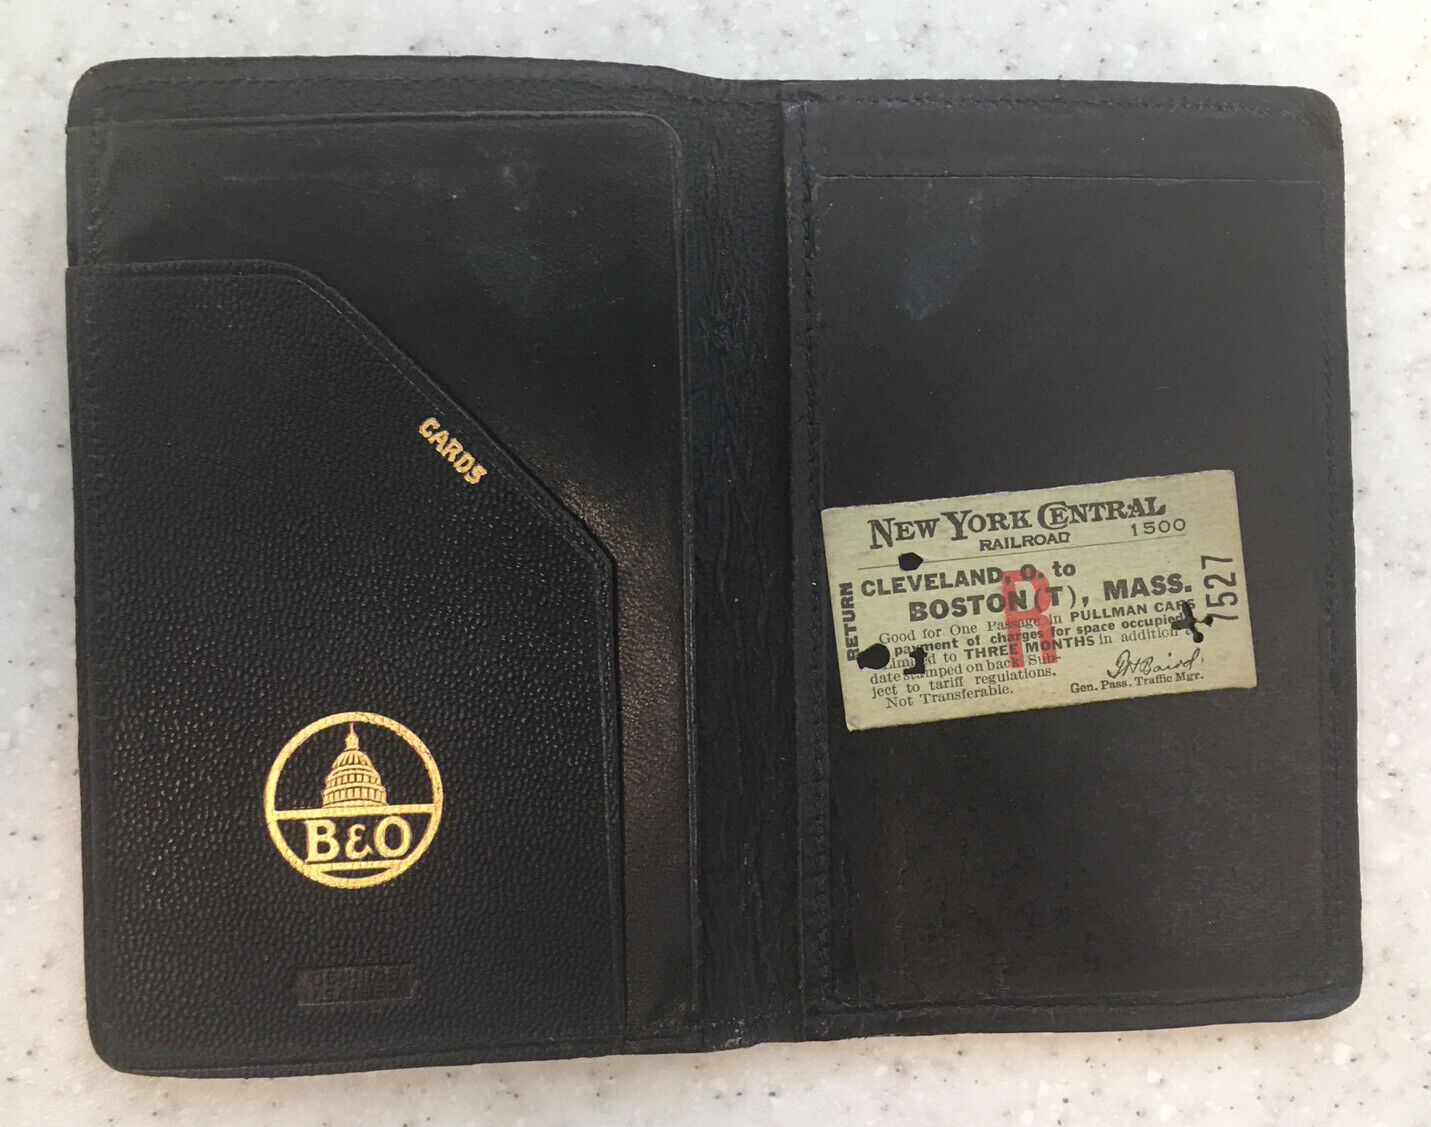 B&O Railroad - Antique Railroad Leather Wallet & Ticket -